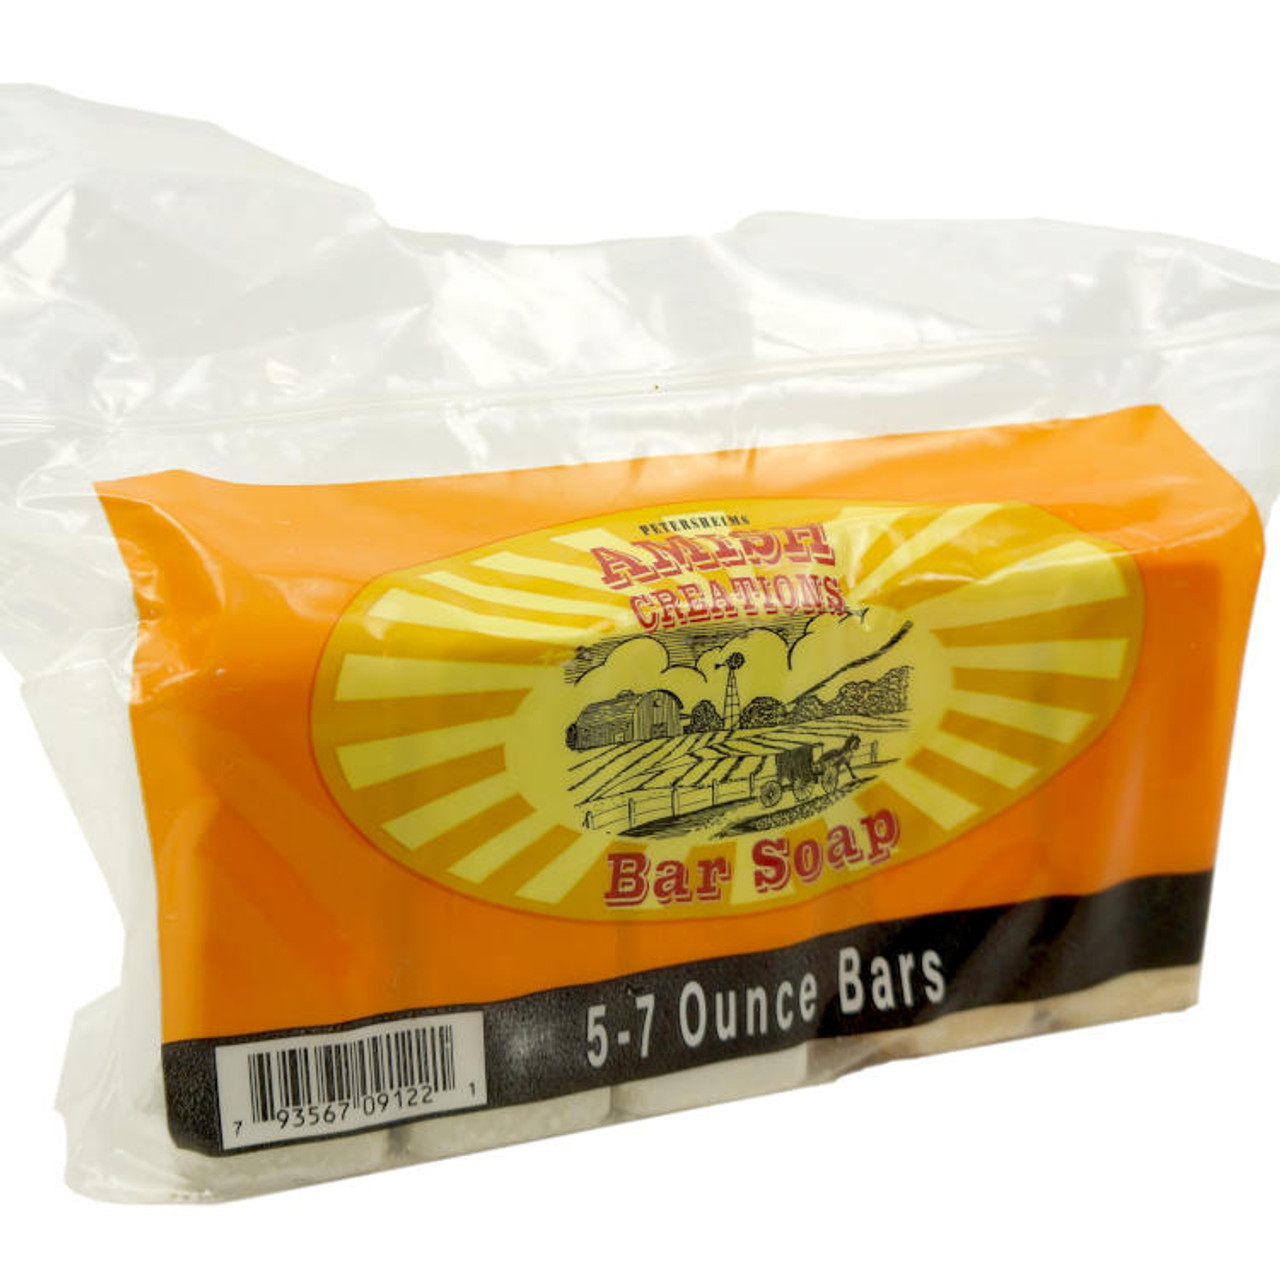 Amish Farm Bar Soap Box, Six HUGE 6+ oz. Bars – Here Today Gone Tomorrow